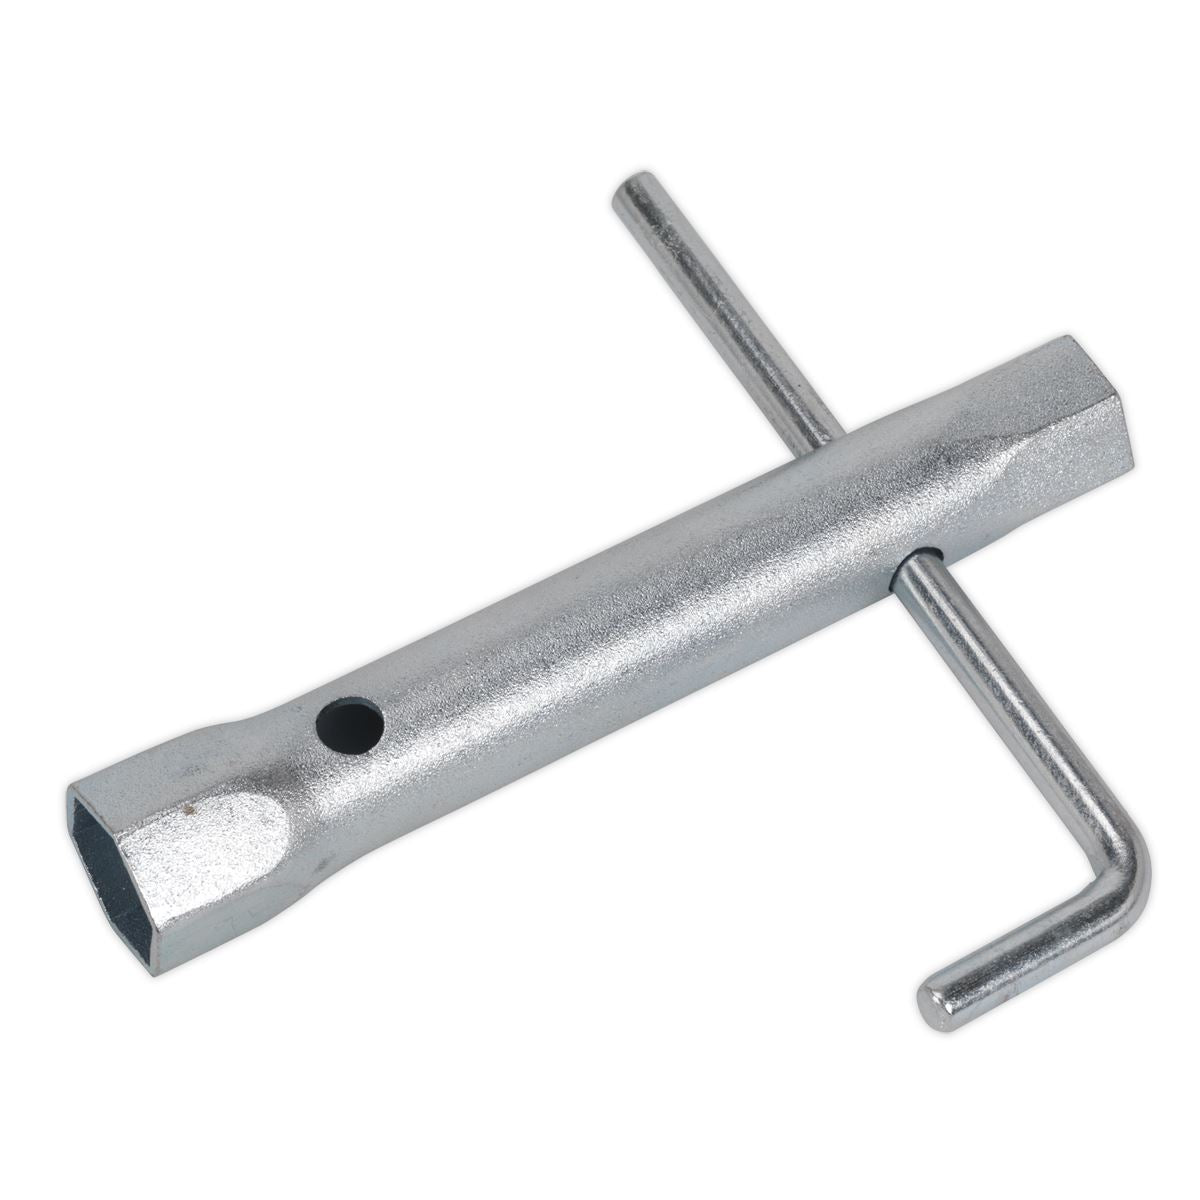 Sealey Double End Long Reach Spark Plug Box Spanner 17/21mm with L-Bar